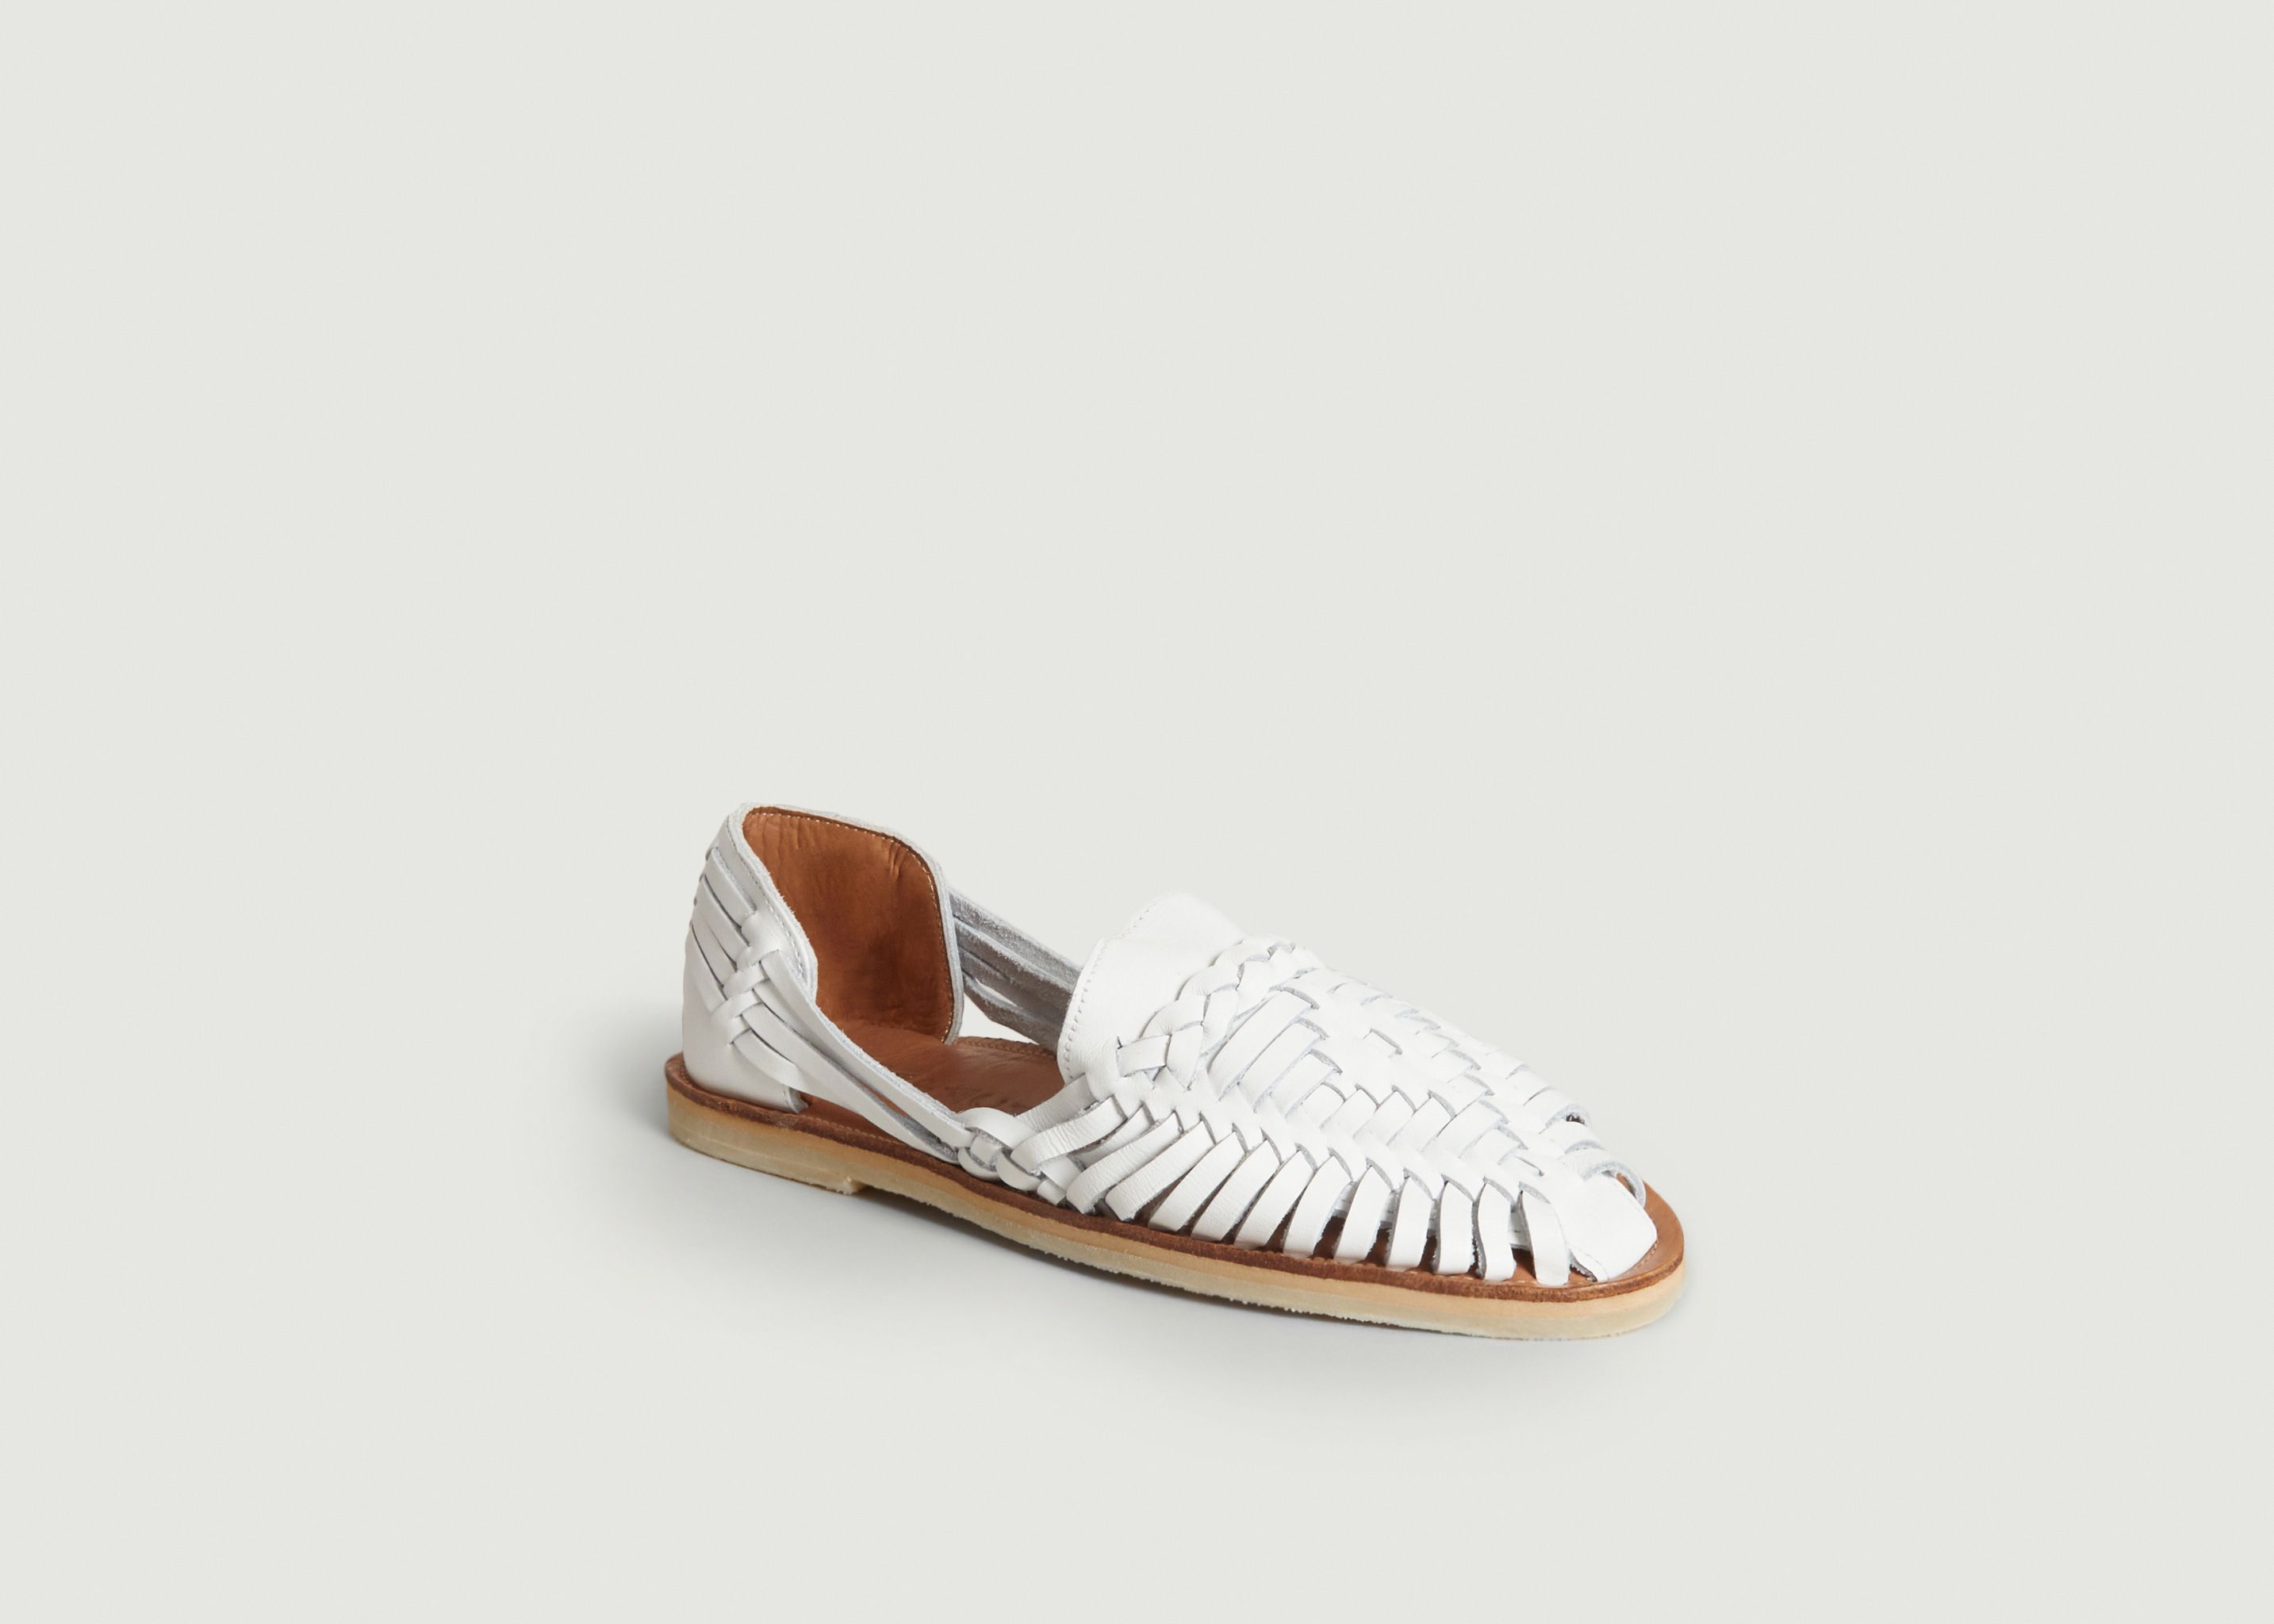 Alegre braided sandal - Mapache